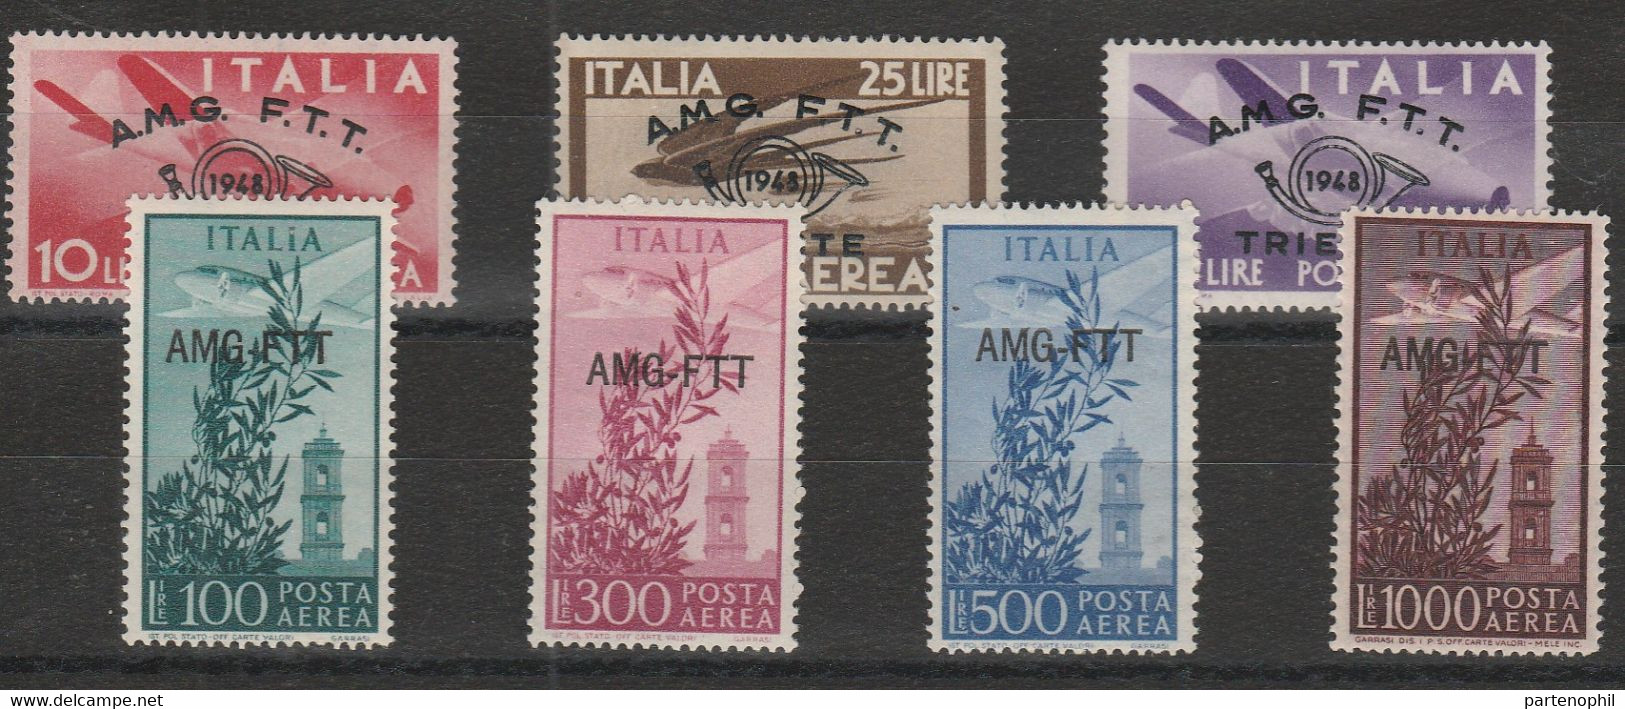 247 - Trieste A Posta Aerea 1949 - Campidoglio N. P.a. 20/26. Cat. € 220,00. SPL MNH - Posta Aerea